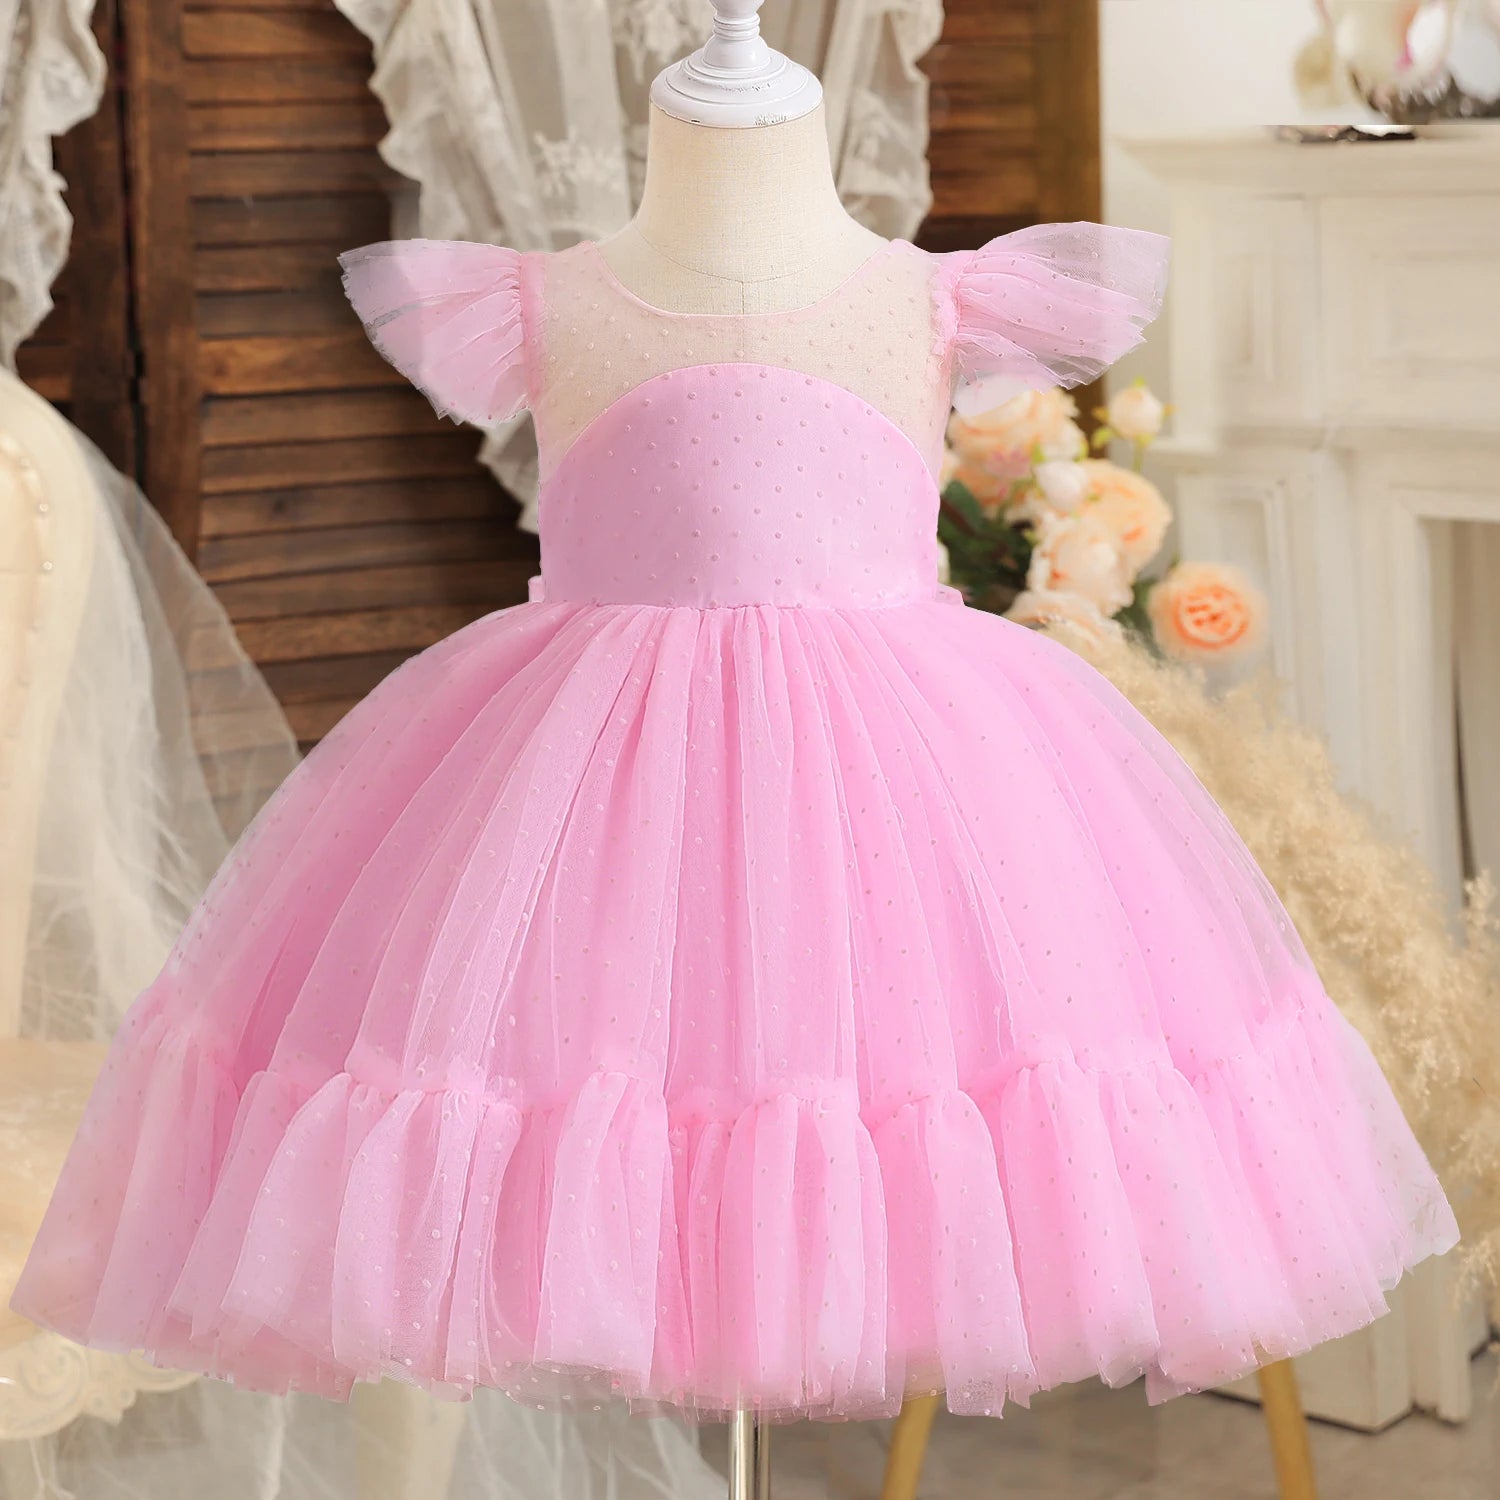 Elegant Dress for Evening Party Princess Gown Pink by Baby Minaj Cruz